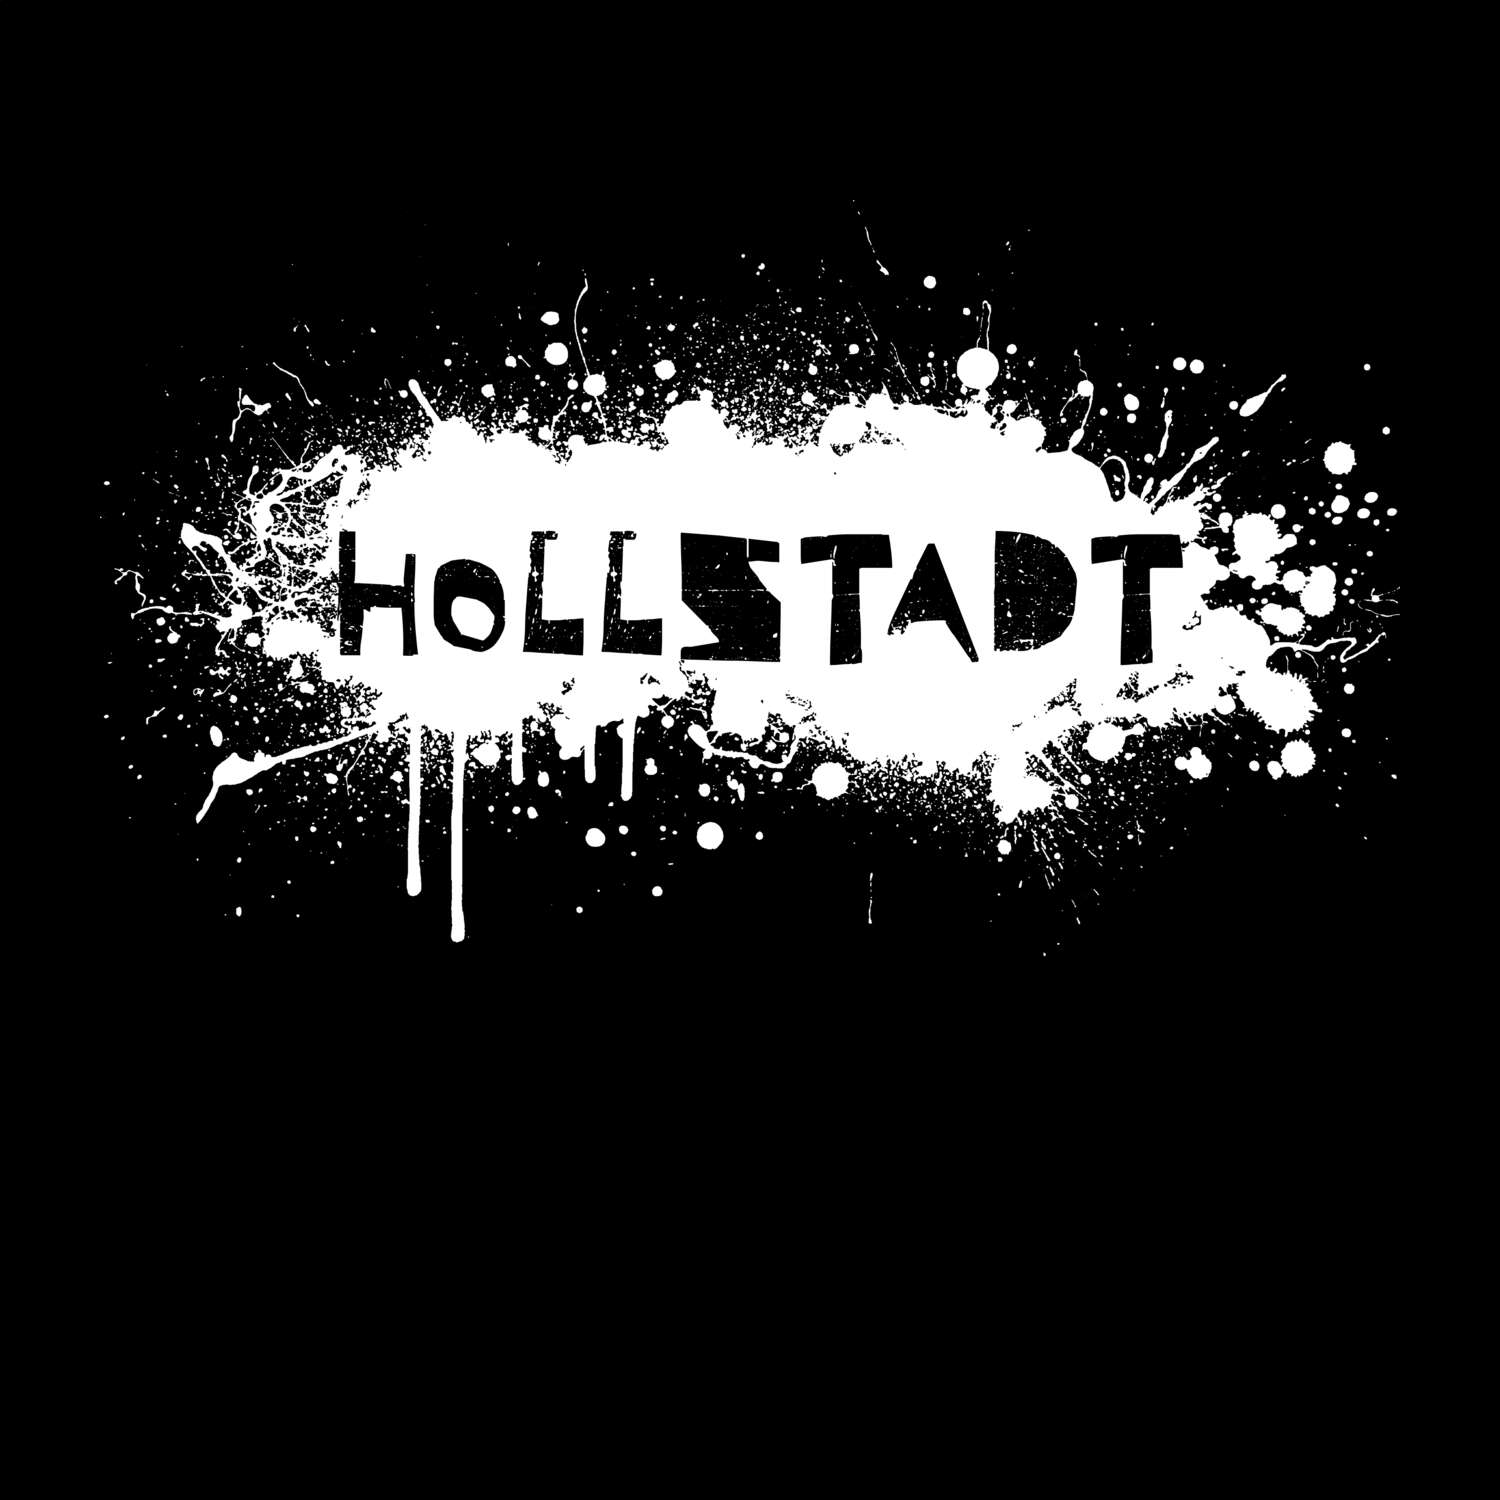 Hollstadt T-Shirt »Paint Splash Punk«